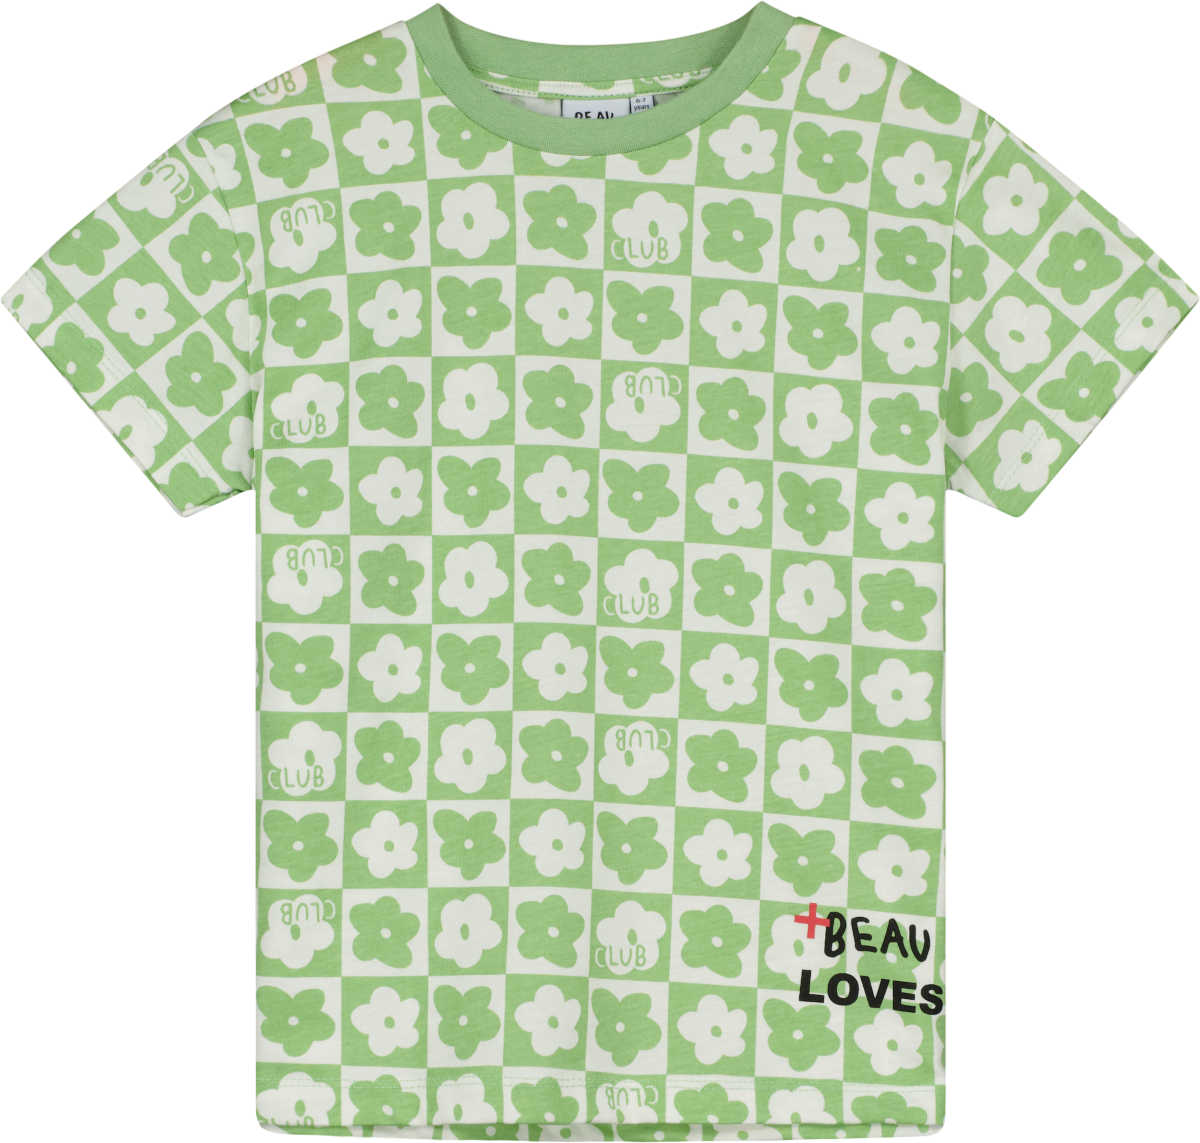 Club Olive Green T-shirt